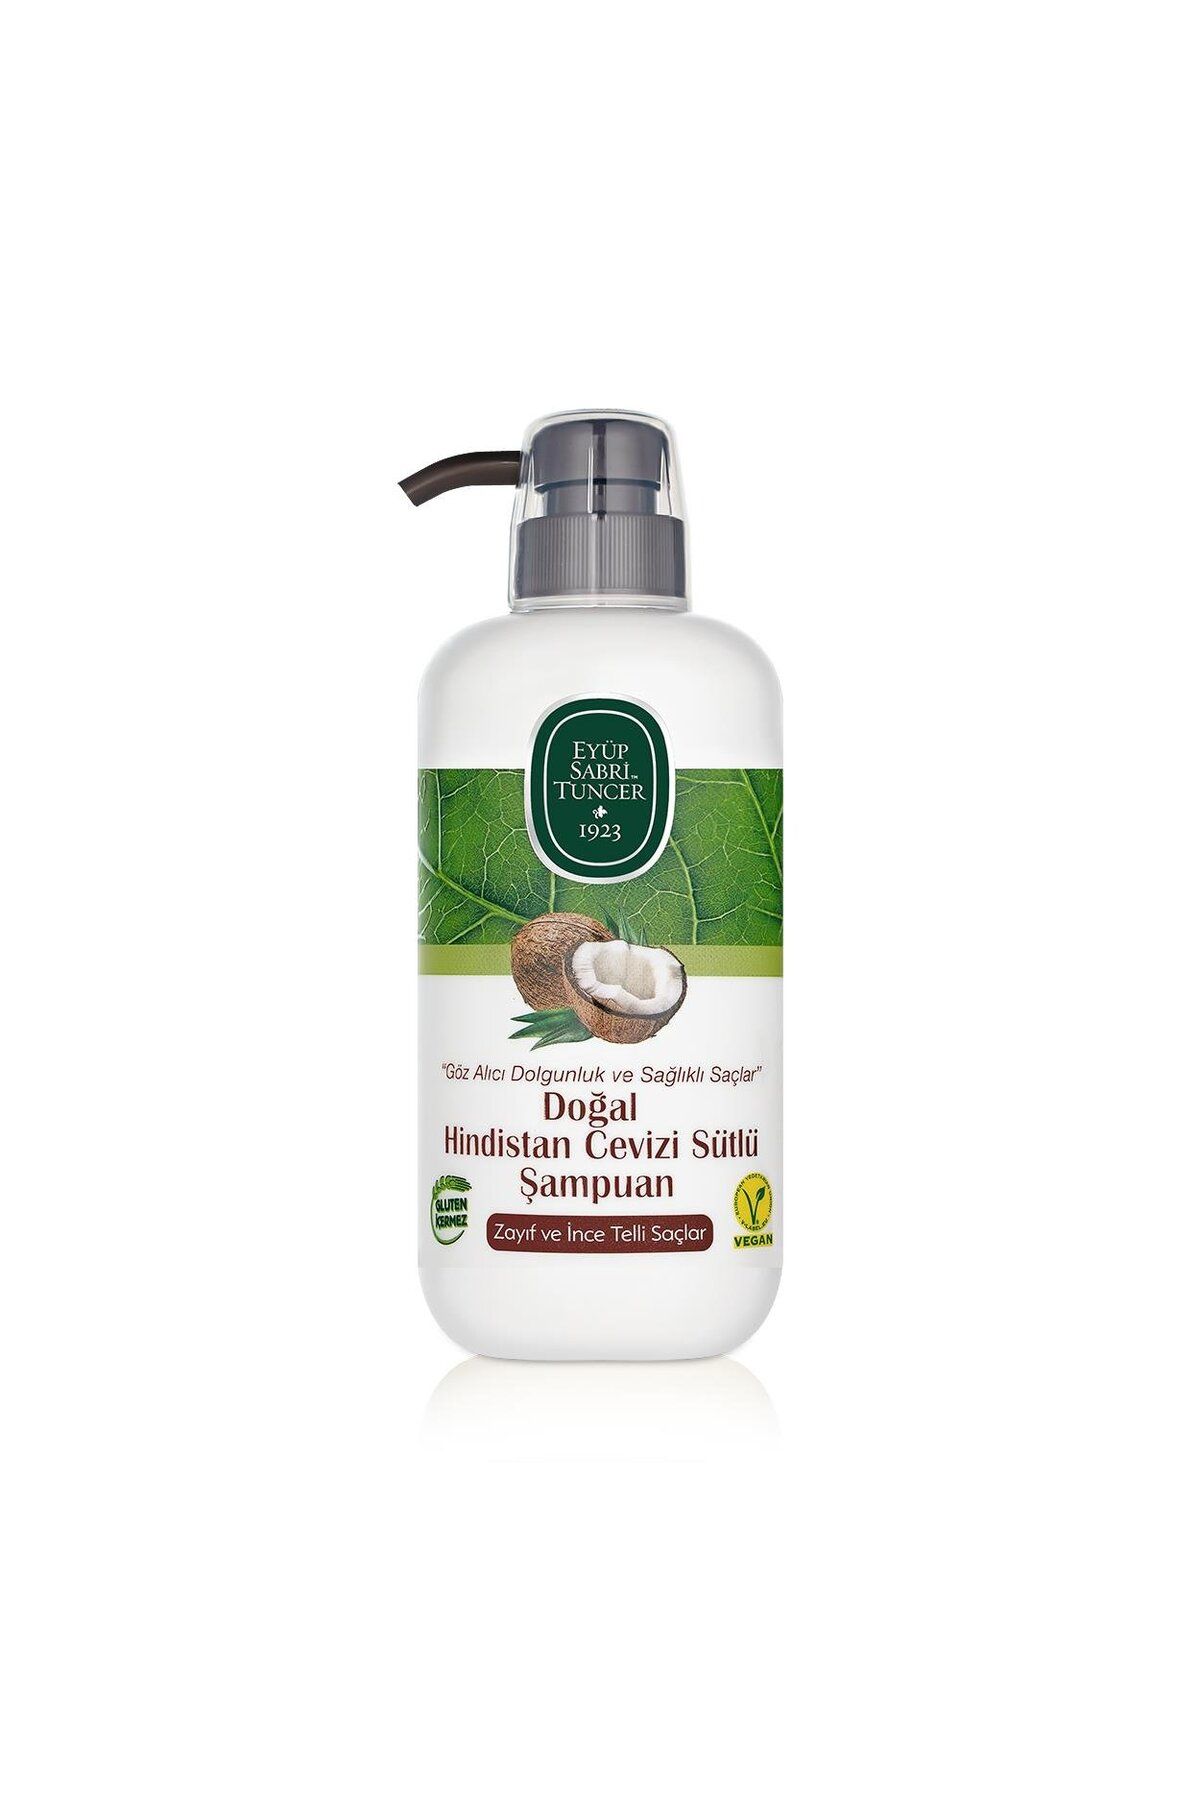 Eyüp Sabri Tuncer Doğal Hindistan Cevizi Sütlü Şampuan 600 ml